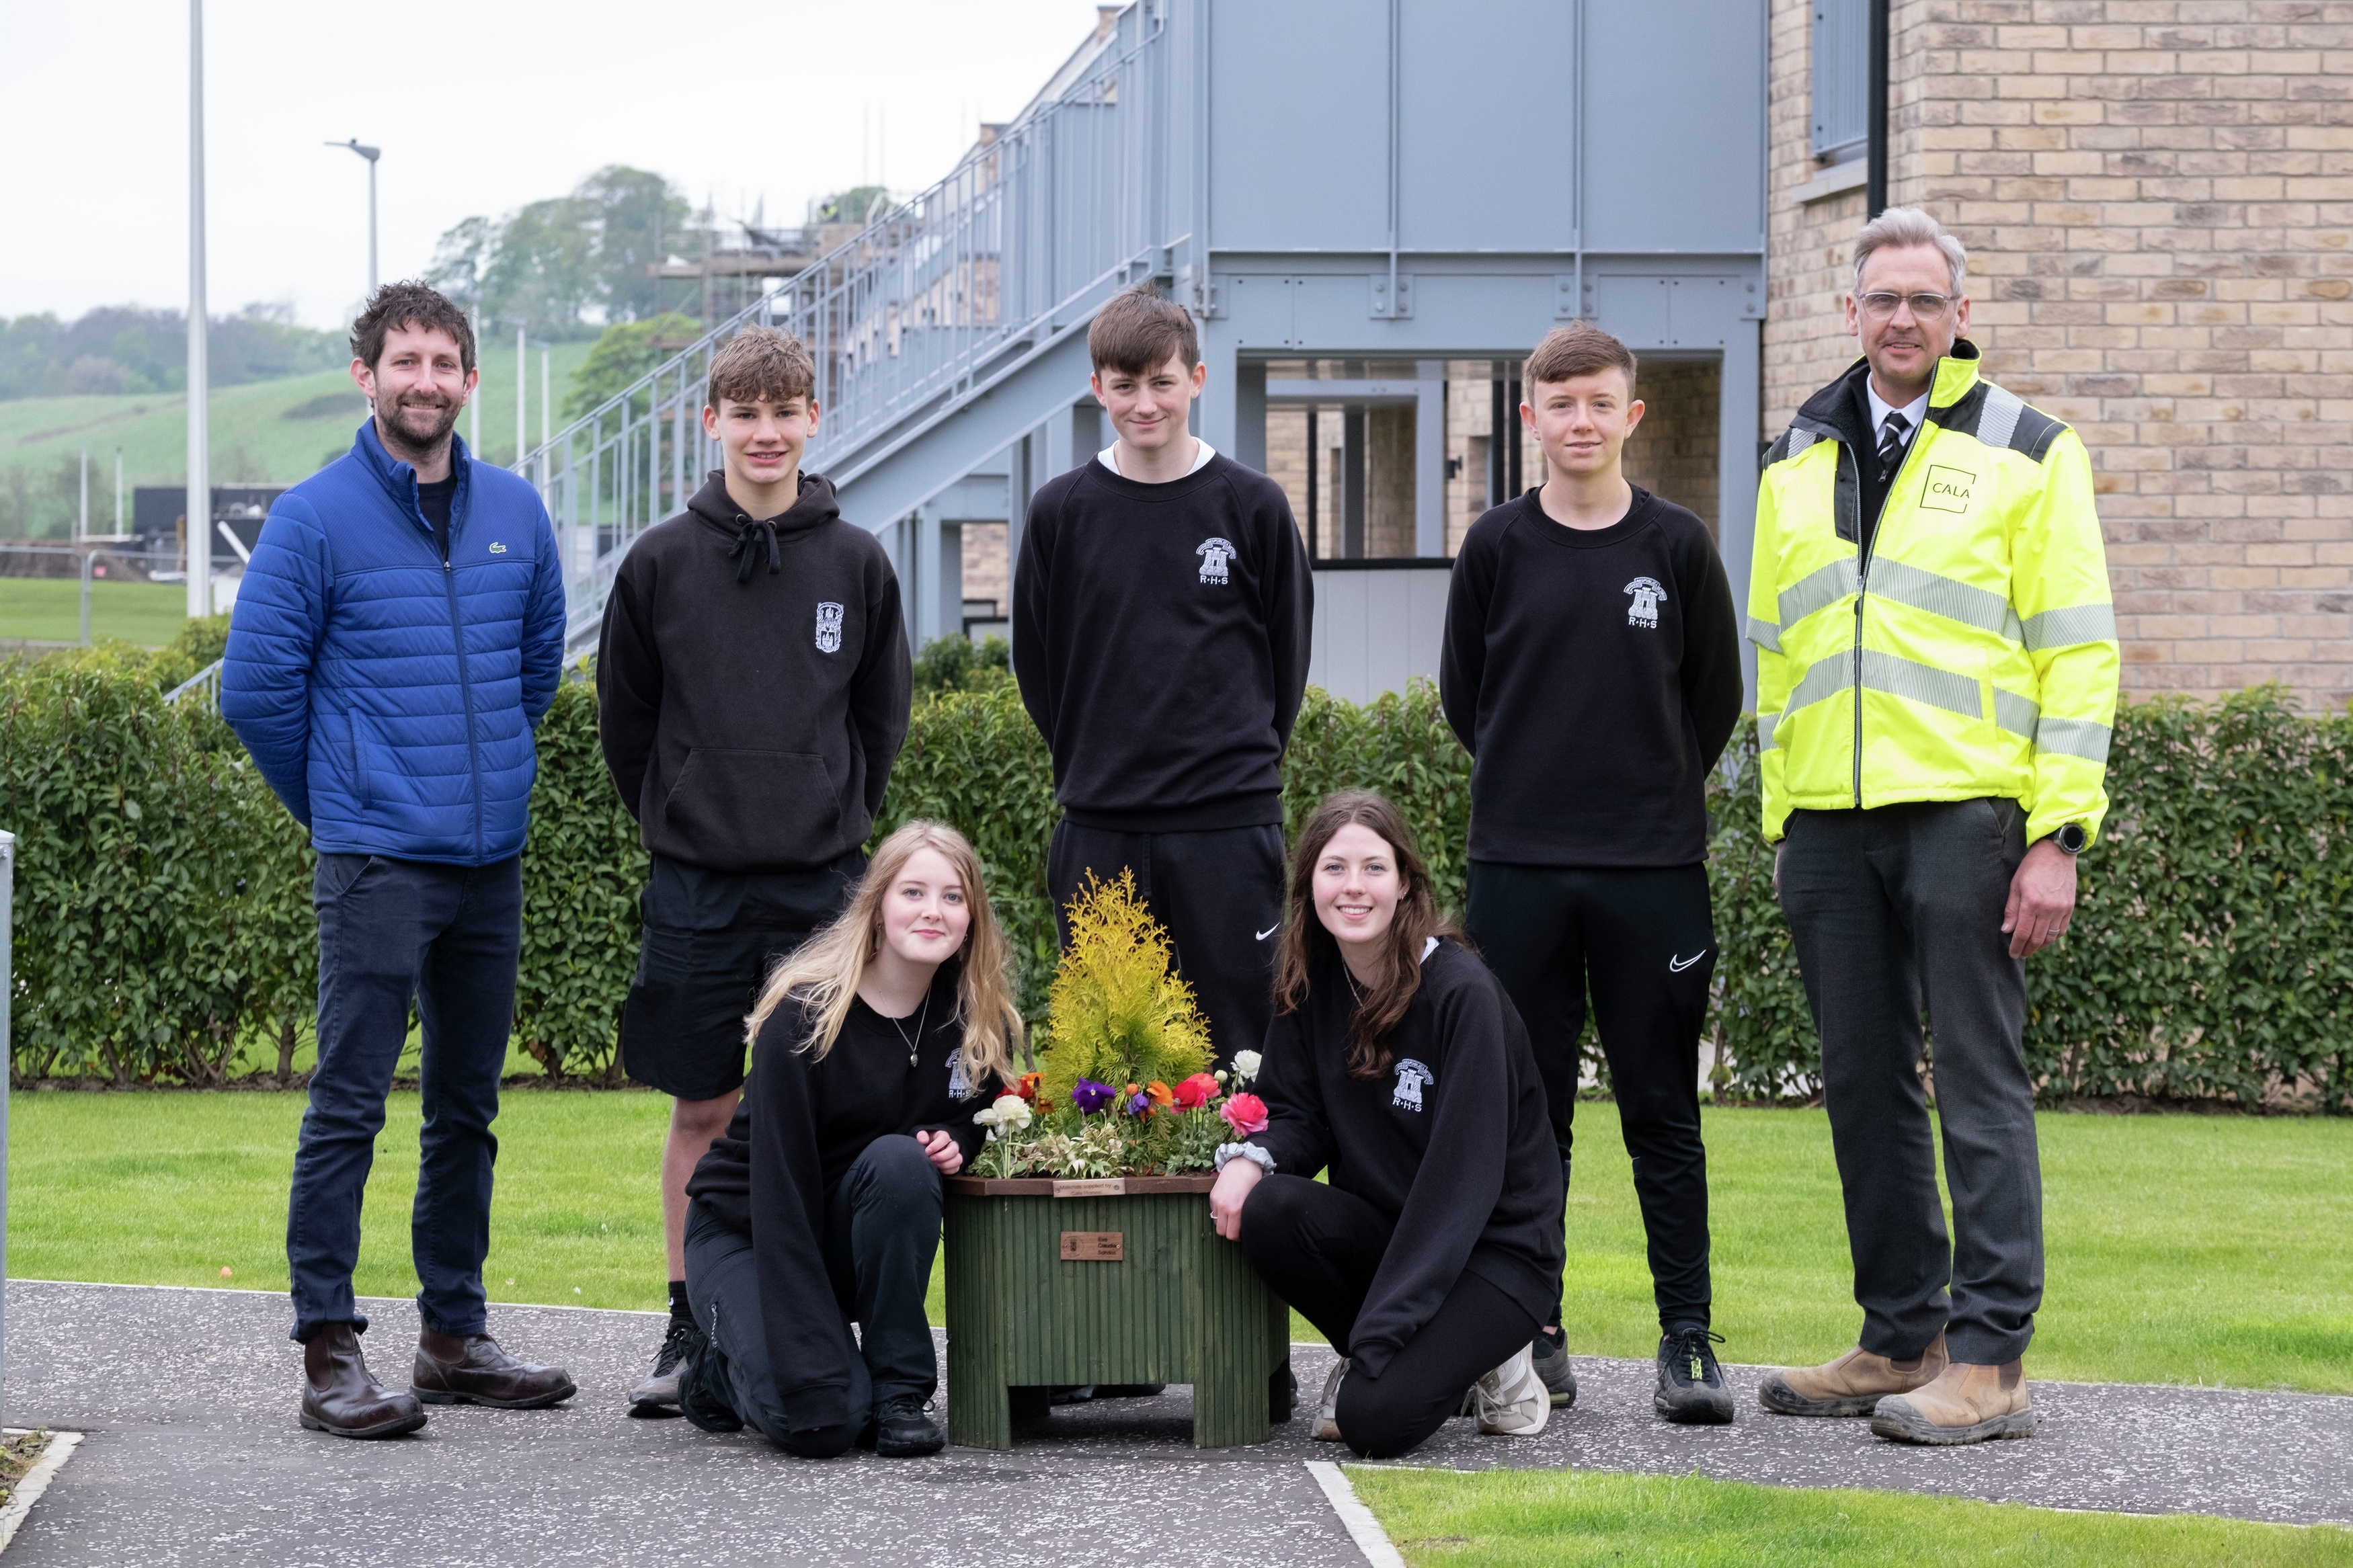 Pupils brighten up Edinburgh community thanks to Cala planters